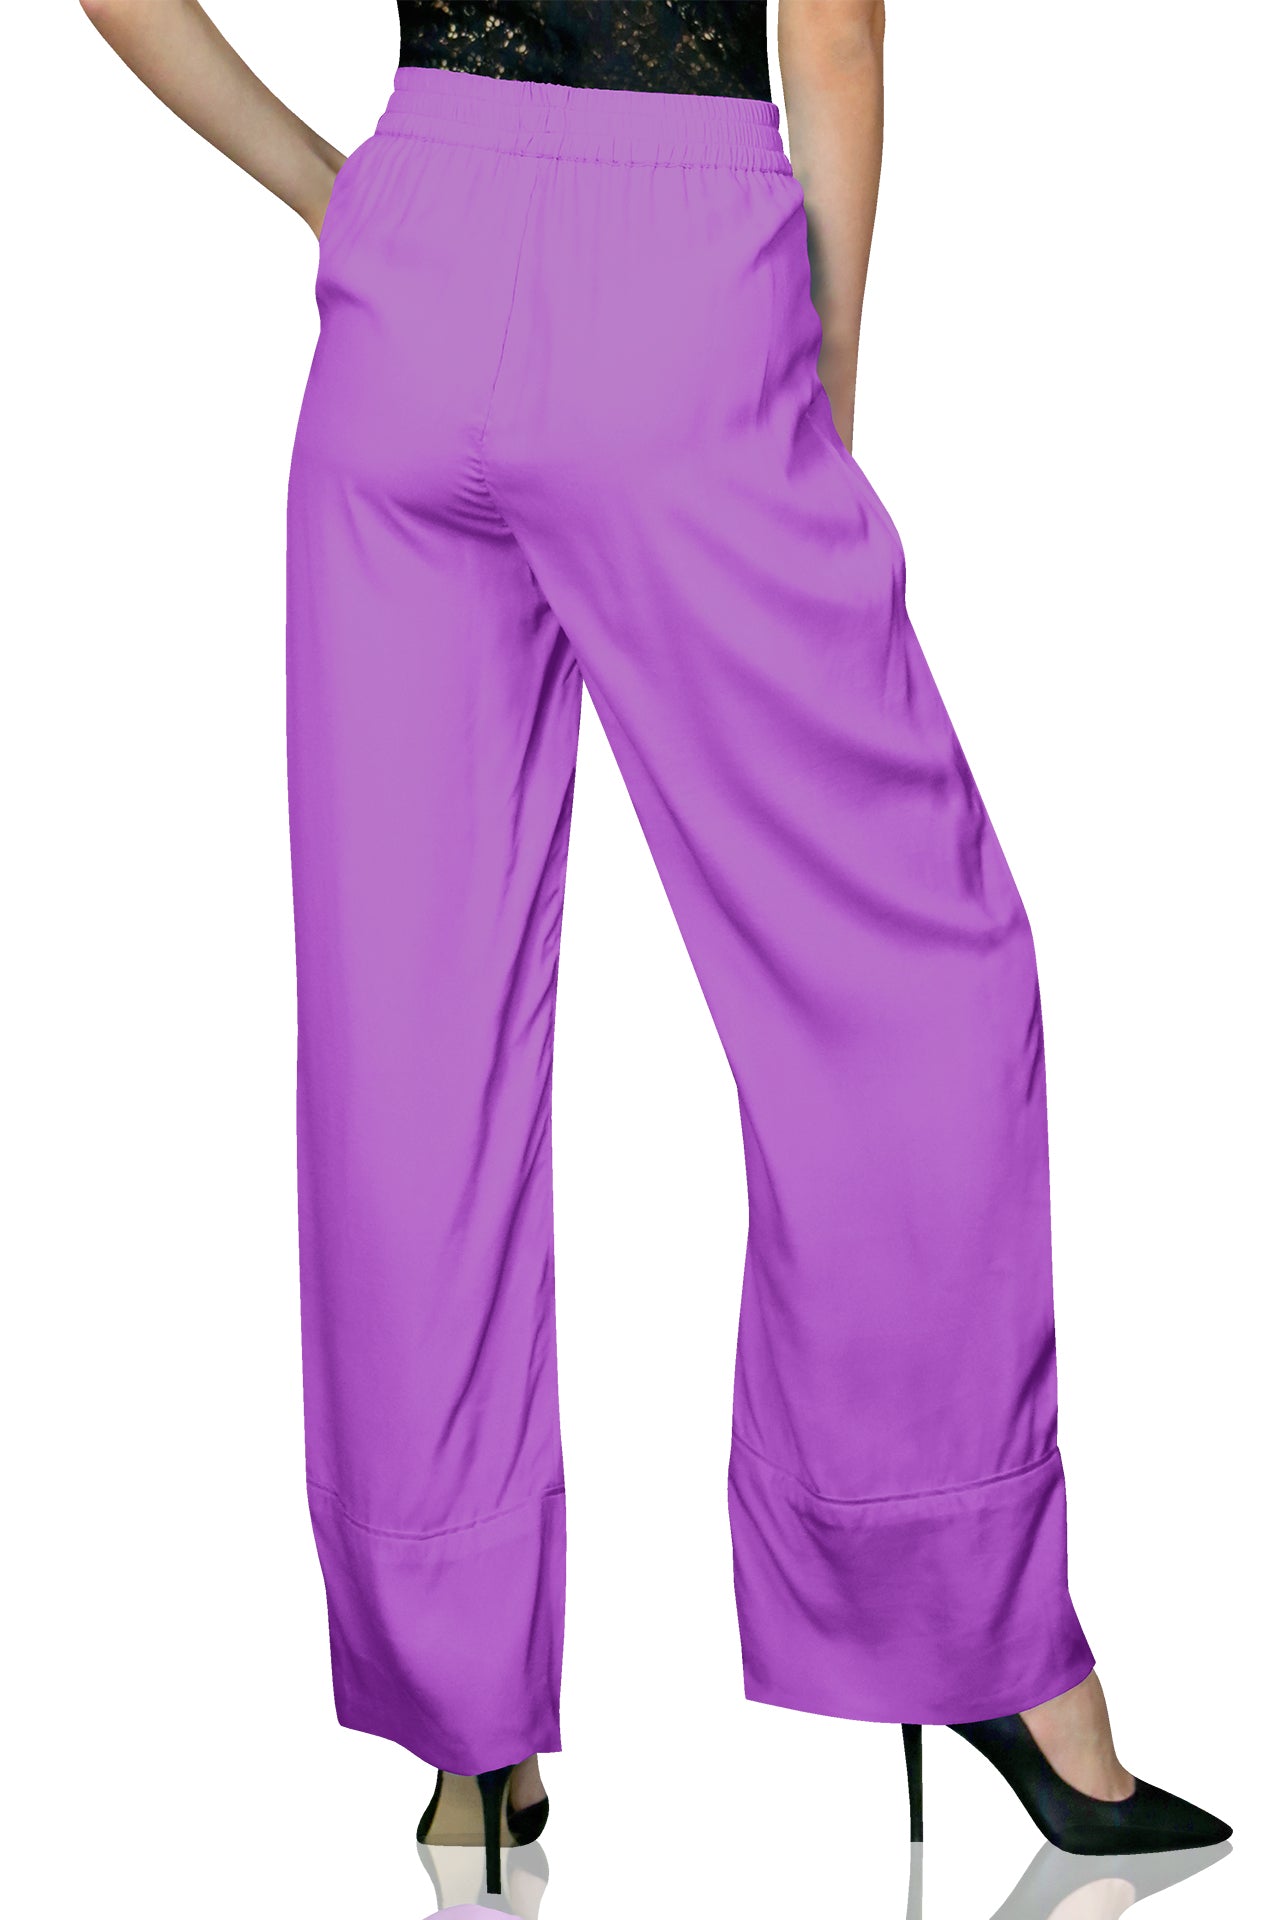 "Kyle X Shahida" "plus size lavender pants" "plazzo pant for women" "straight pants for women"